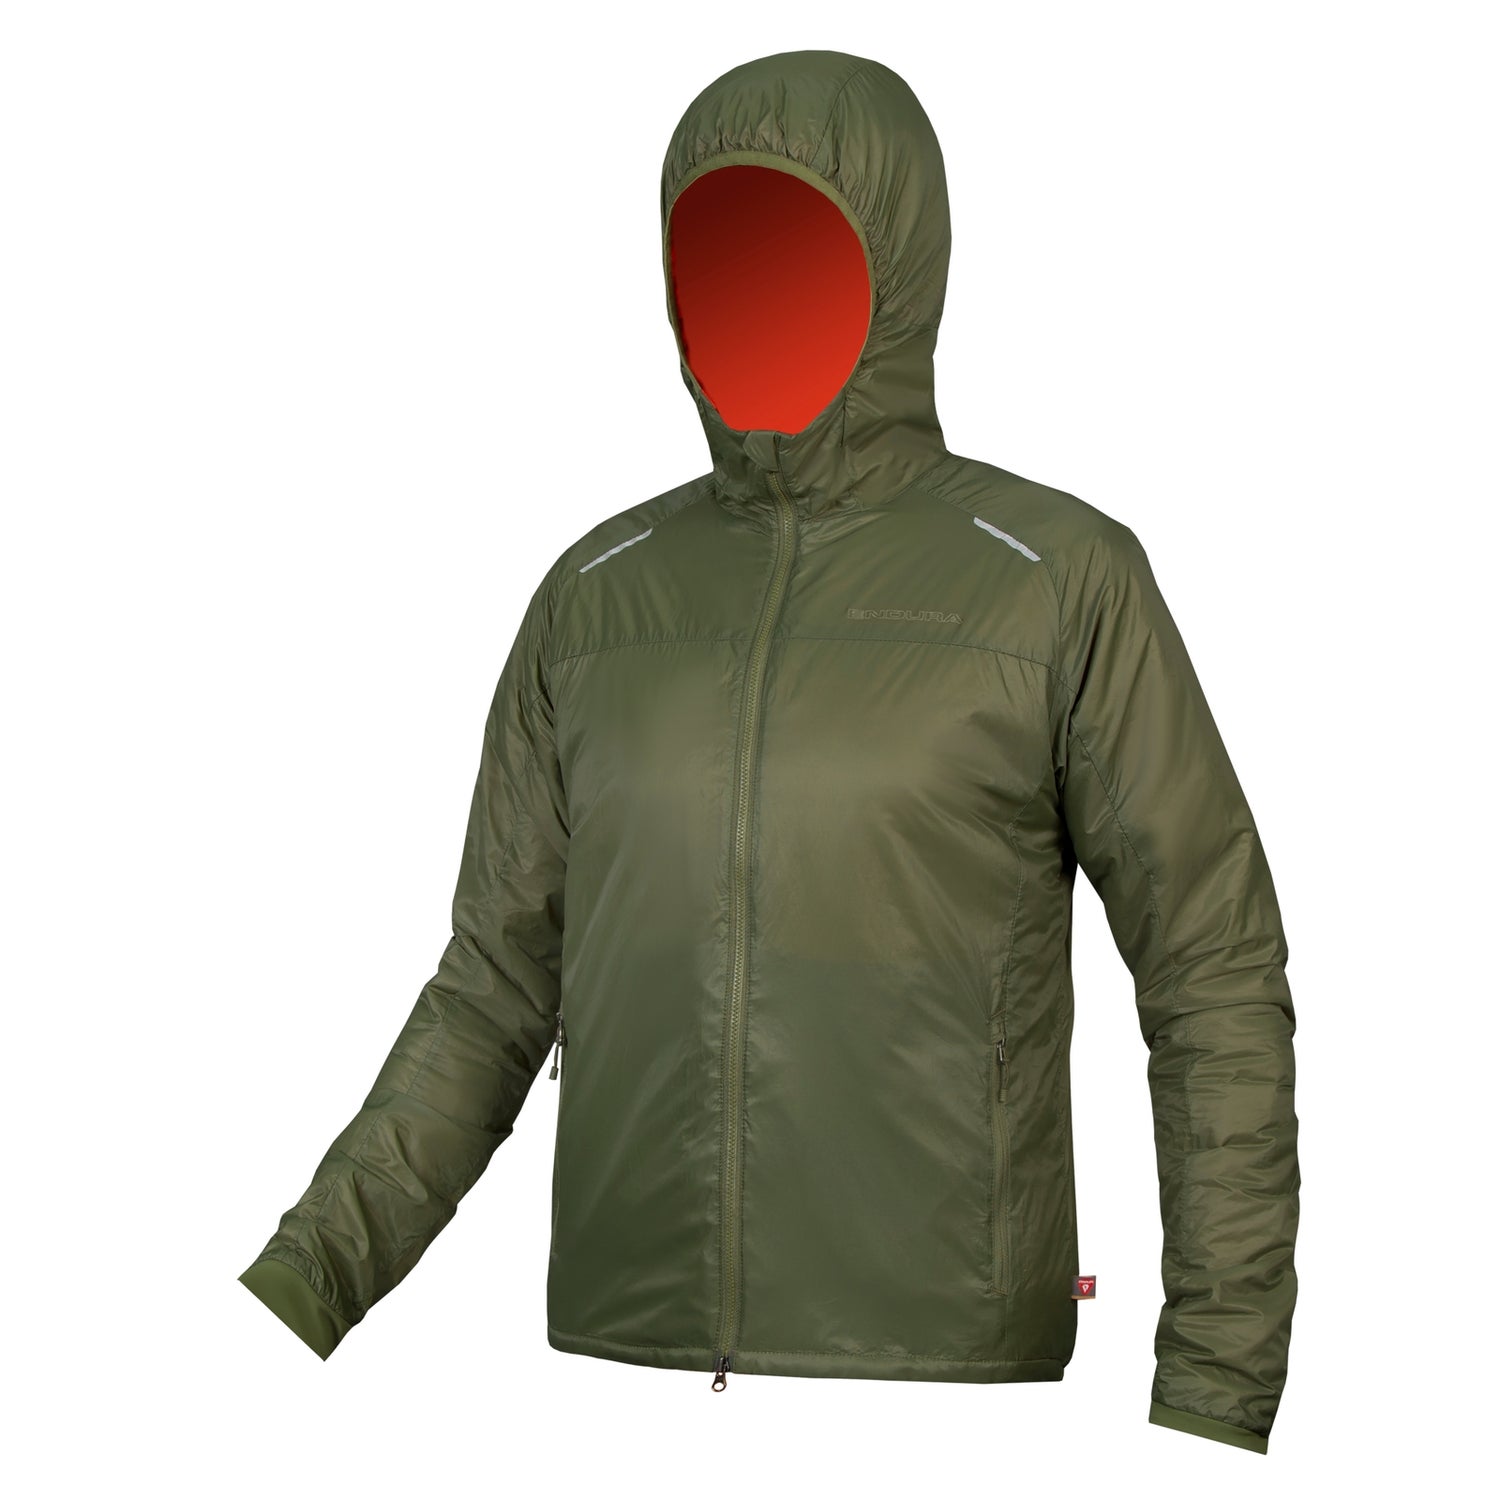 Men's GV500 Insulated Jacket - Olive Green - XXXL